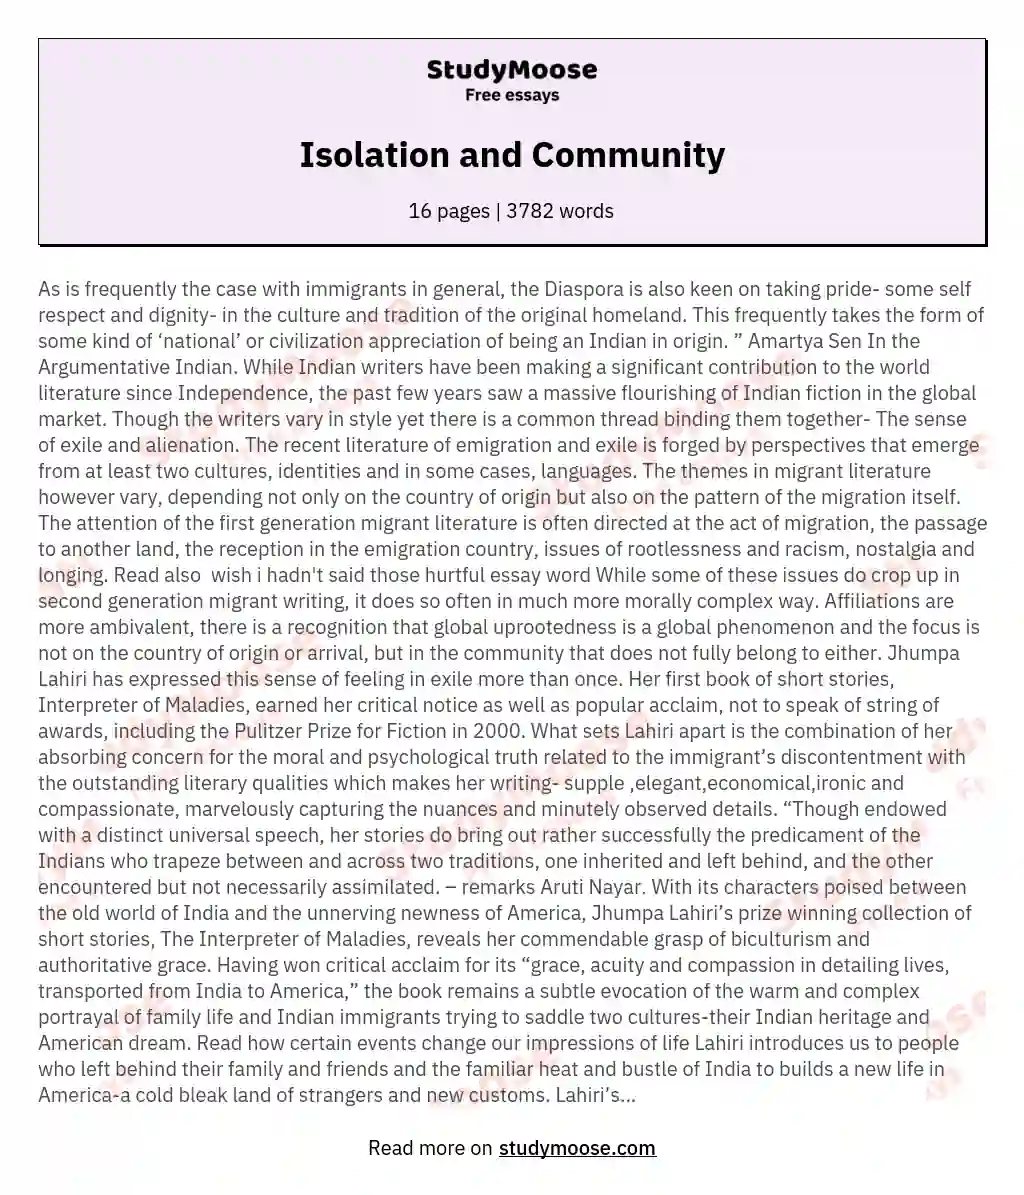 Isolation and Community essay